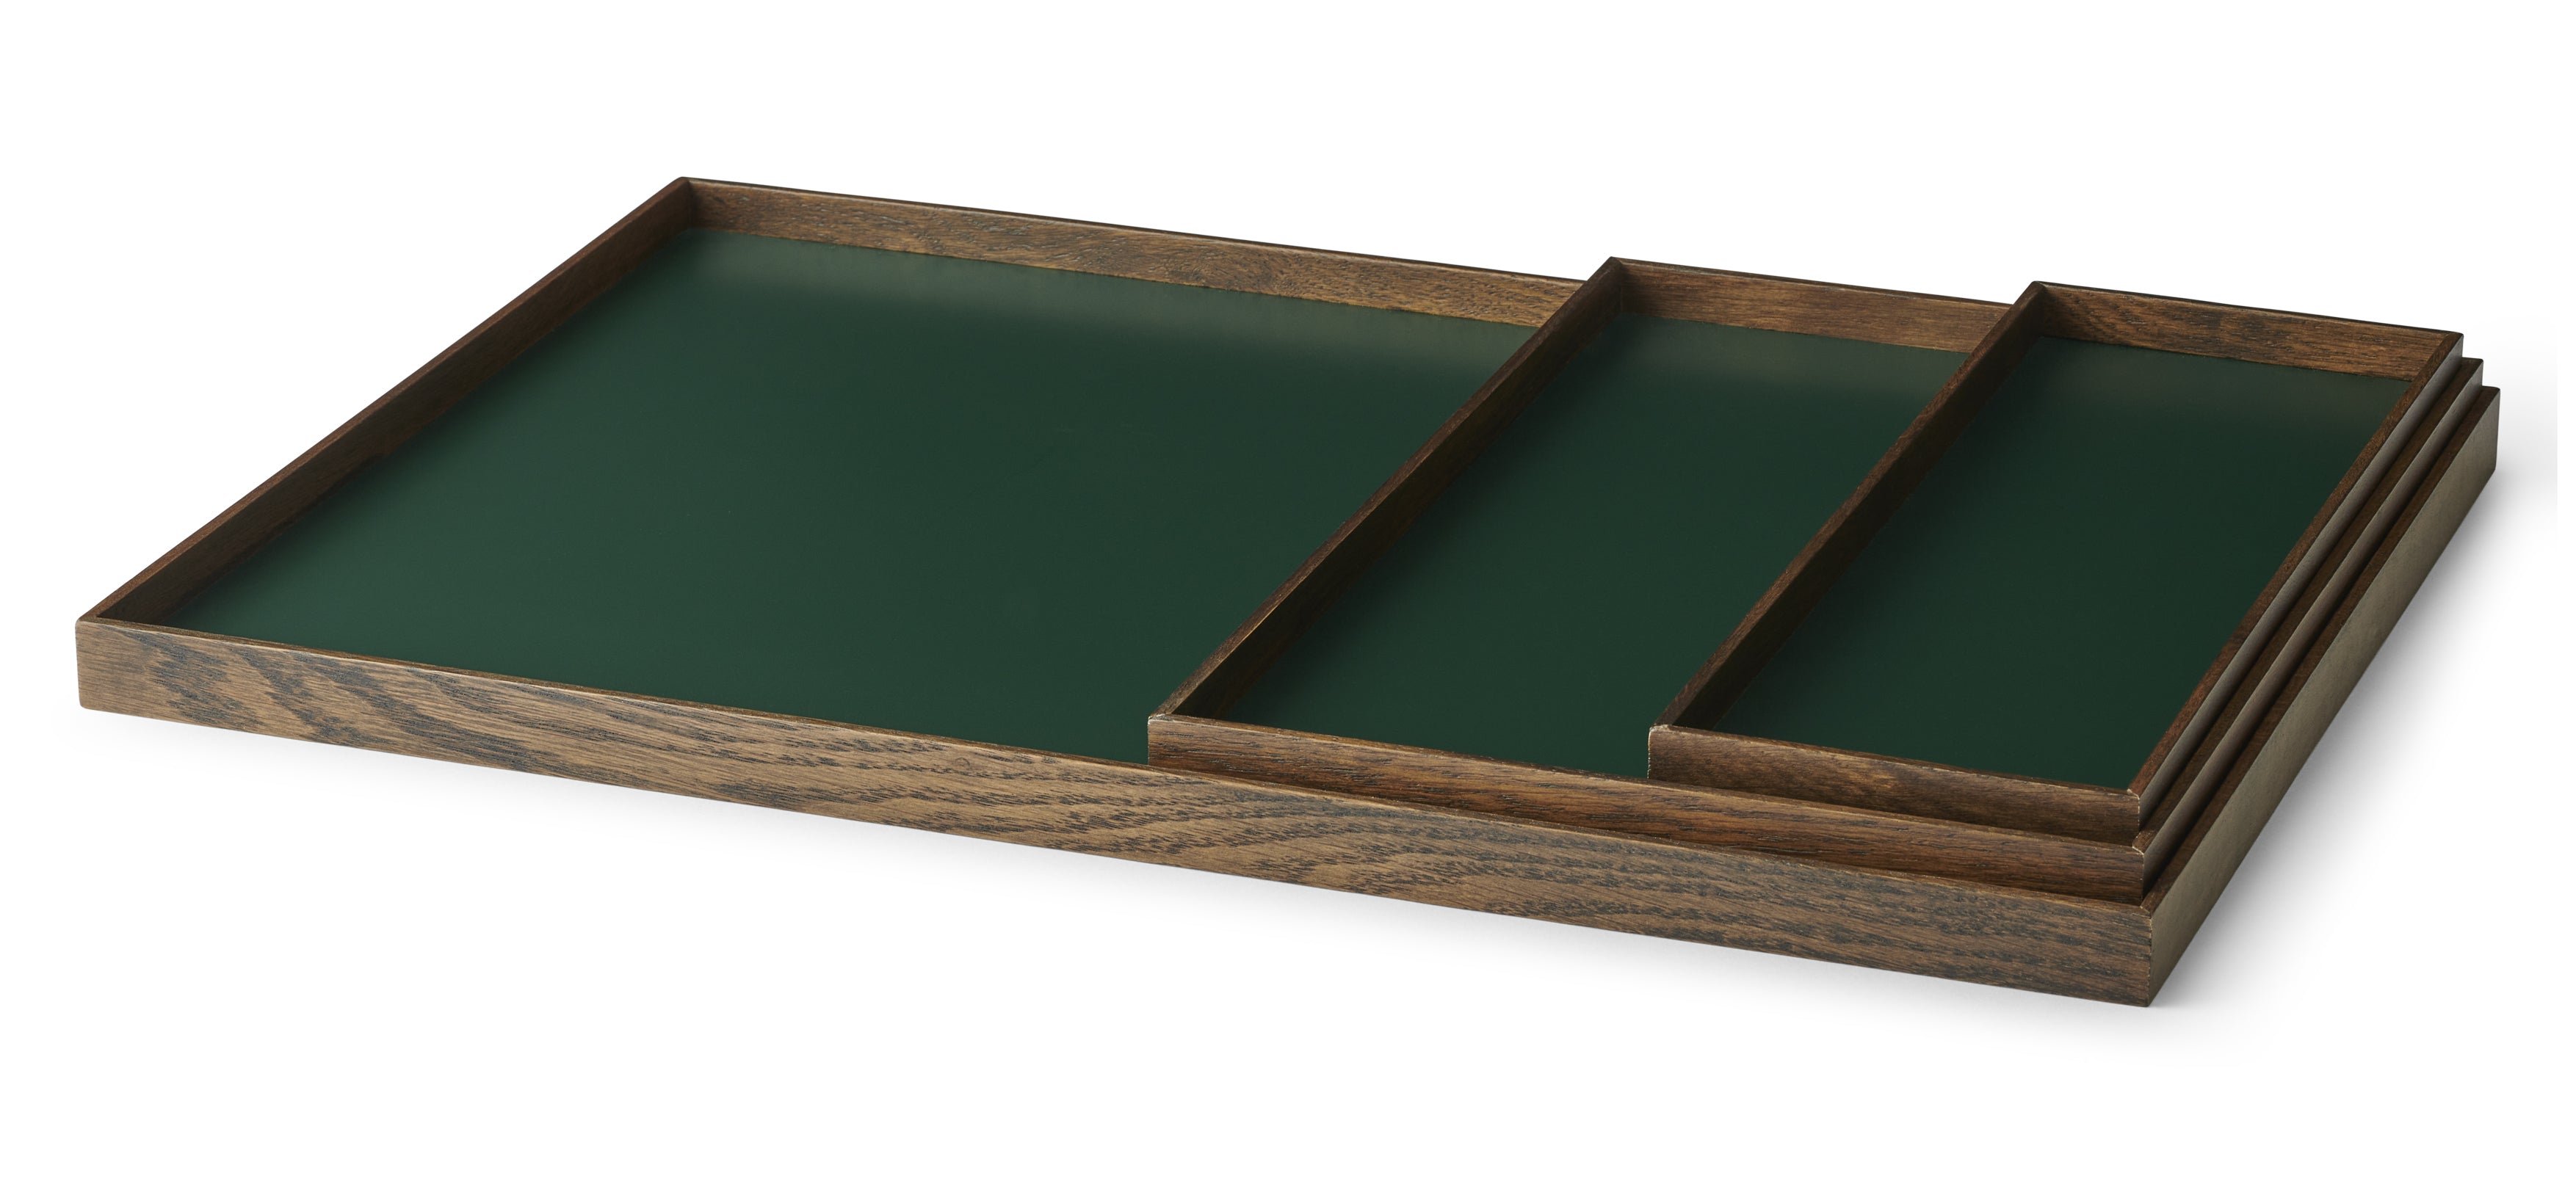 Gejst Frame Tray Smoked Oak/Green, Large